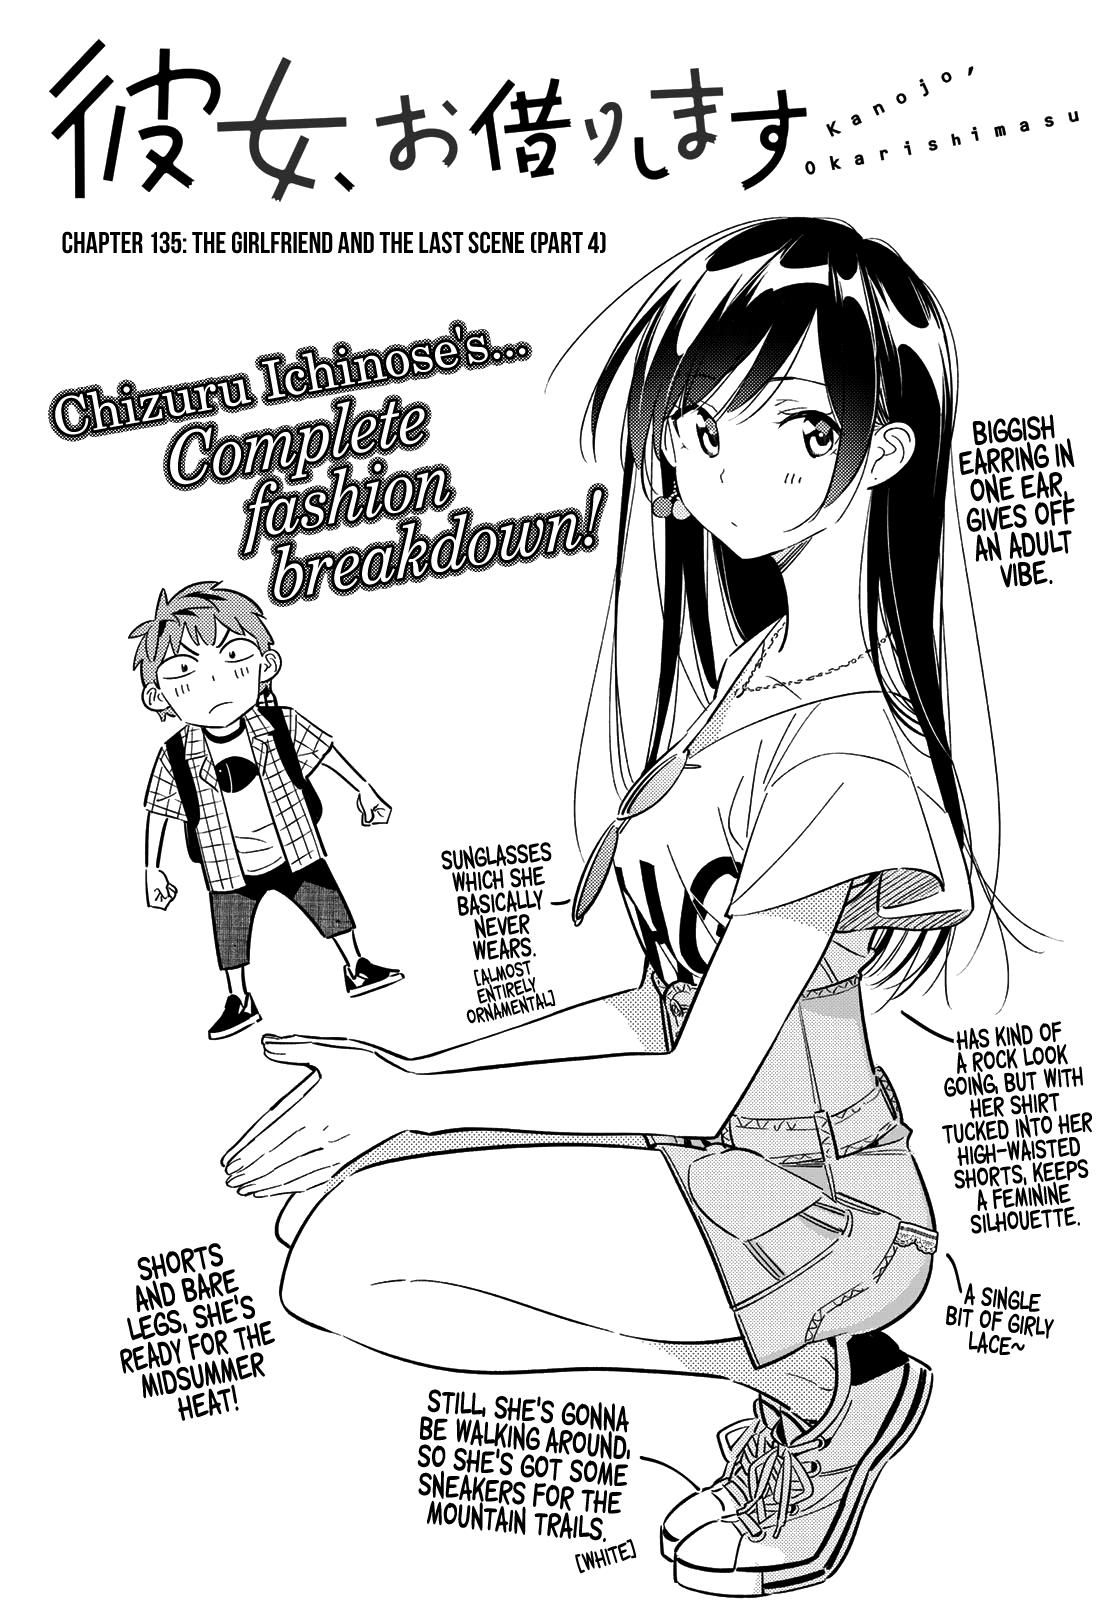 Read Kanojo, Okarishimasu Chapter 308: The Girlfriend And Her Rental Work (2)  on Mangakakalot